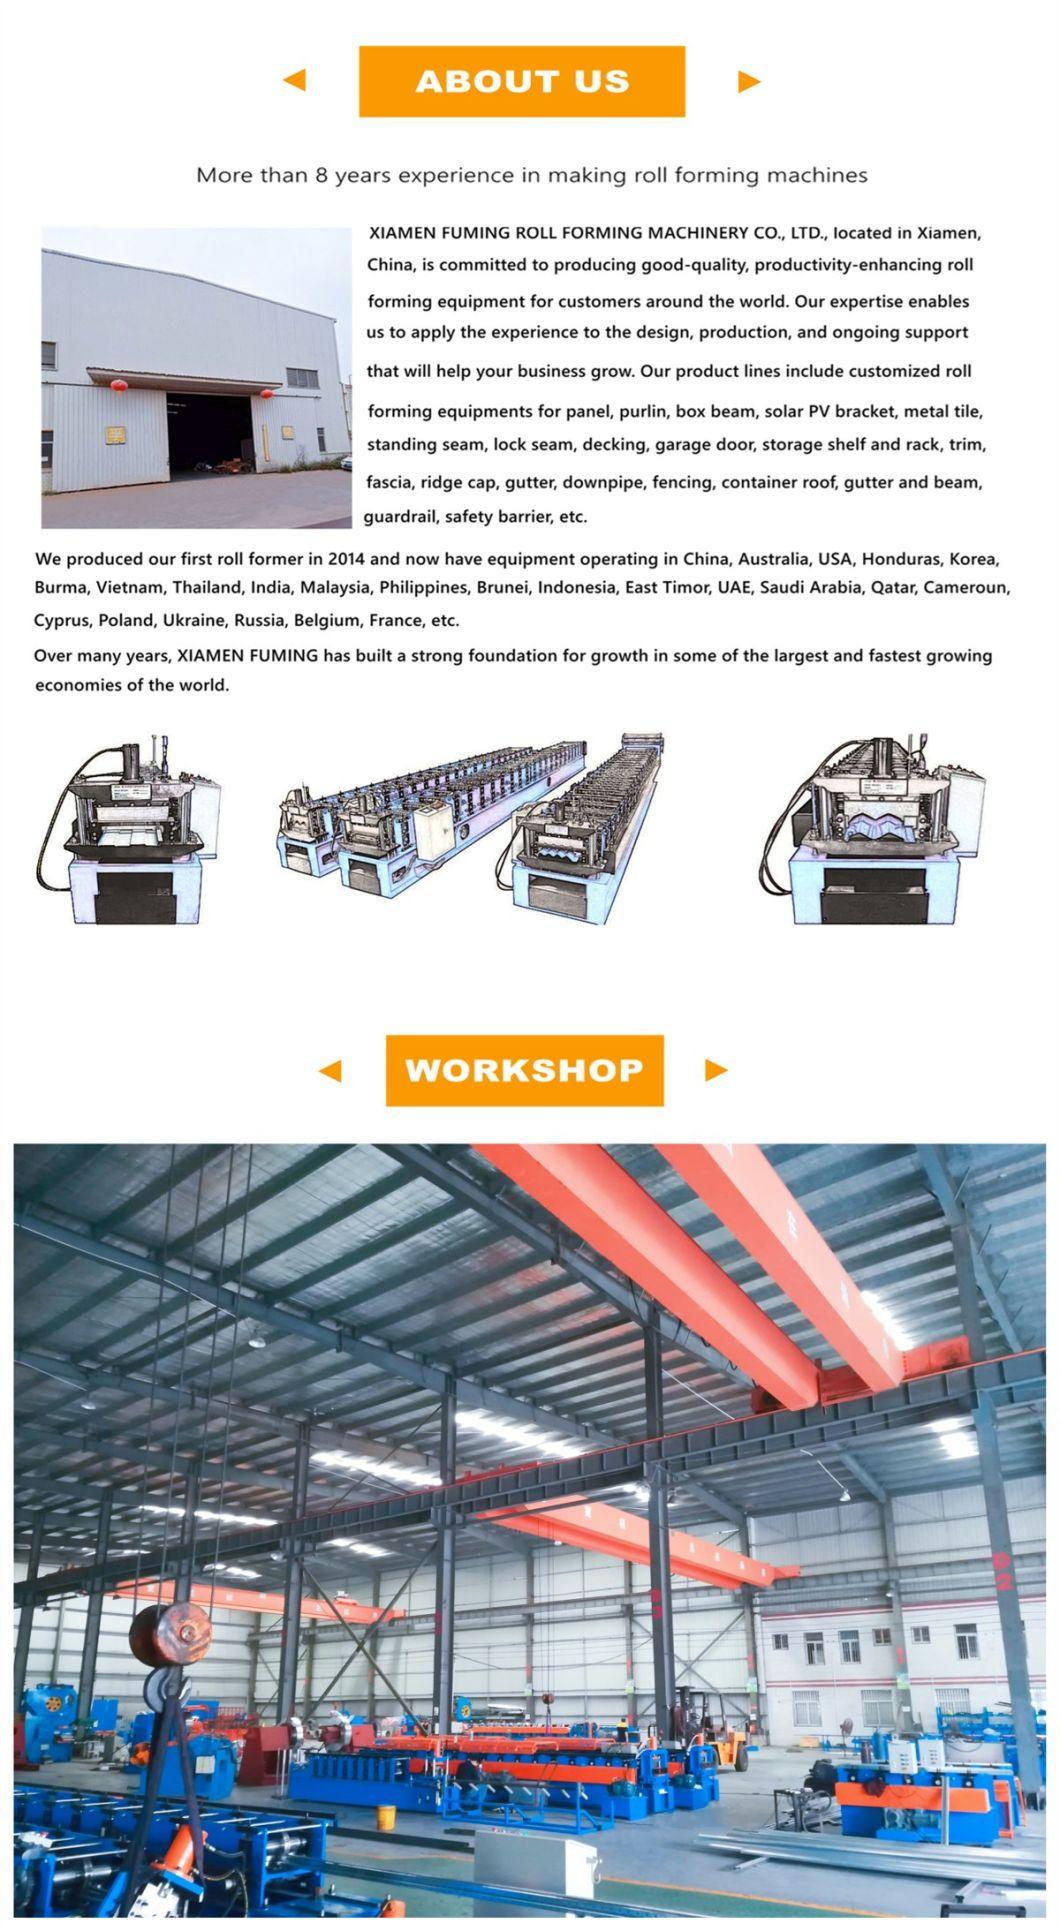 Roof Gear/Sprocket, Gear Box or Toroidal Worm Roll Forming Machine Price Rollformer